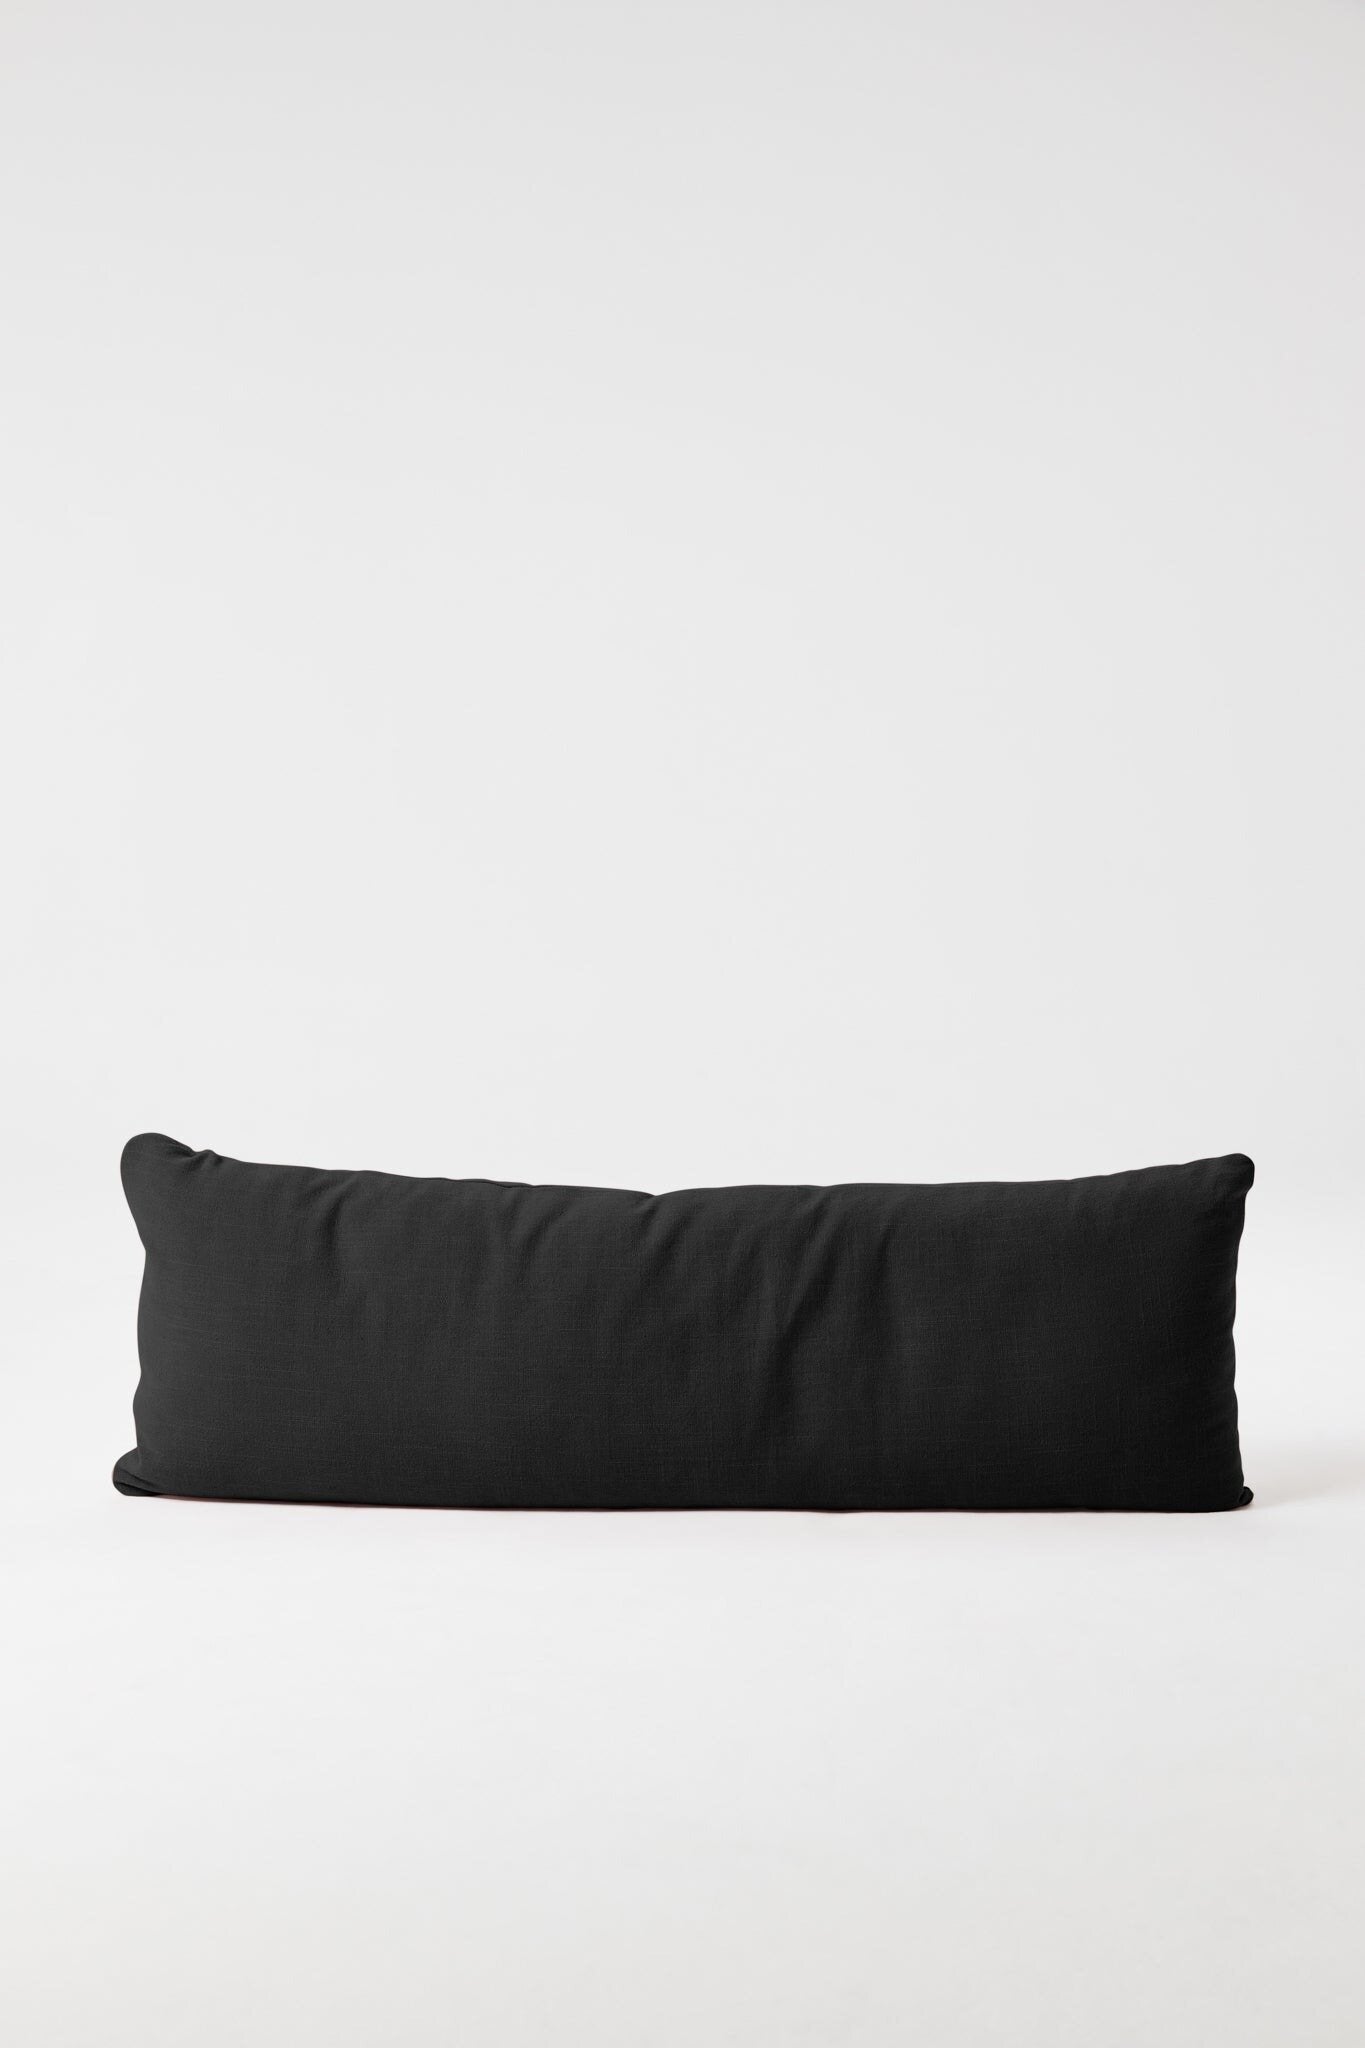 Accents Cotton Canvas Weave Long Bolster Pillow - Cinder Pillows